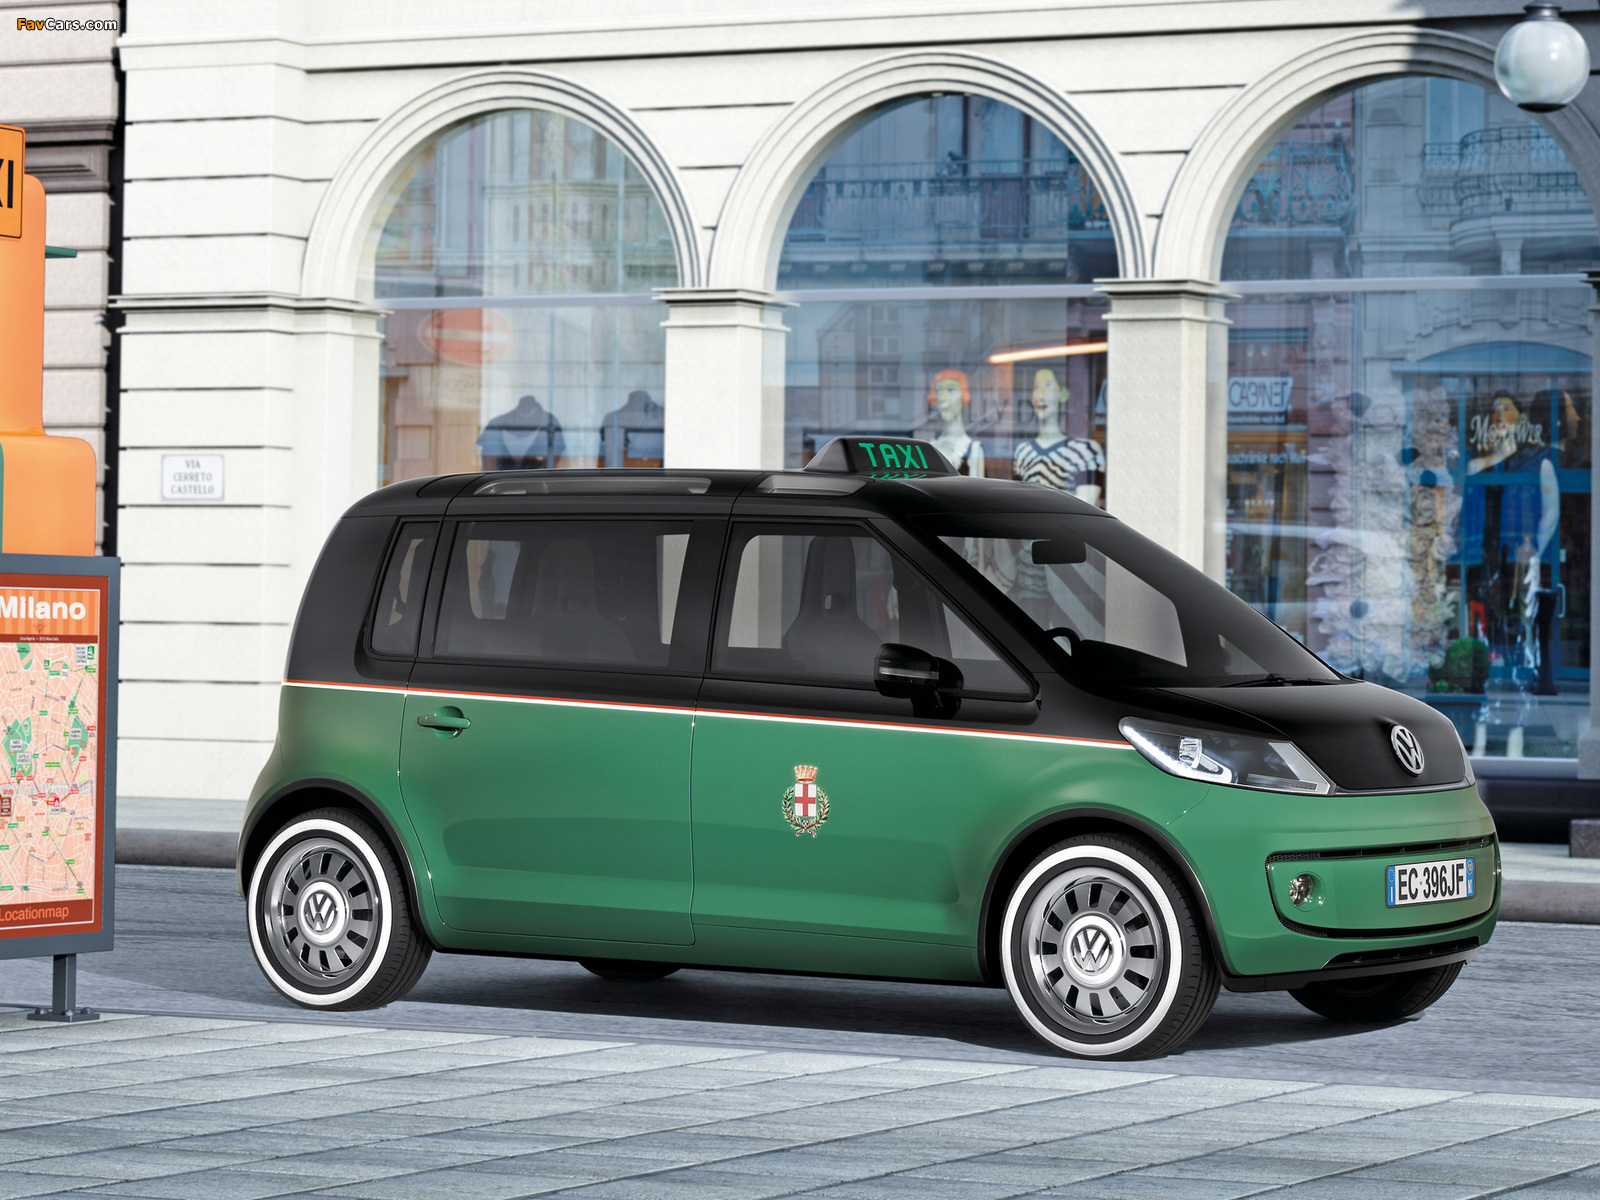 Volkswagen Milano Taxi Concept 2010 pictures (1600 x 1200)